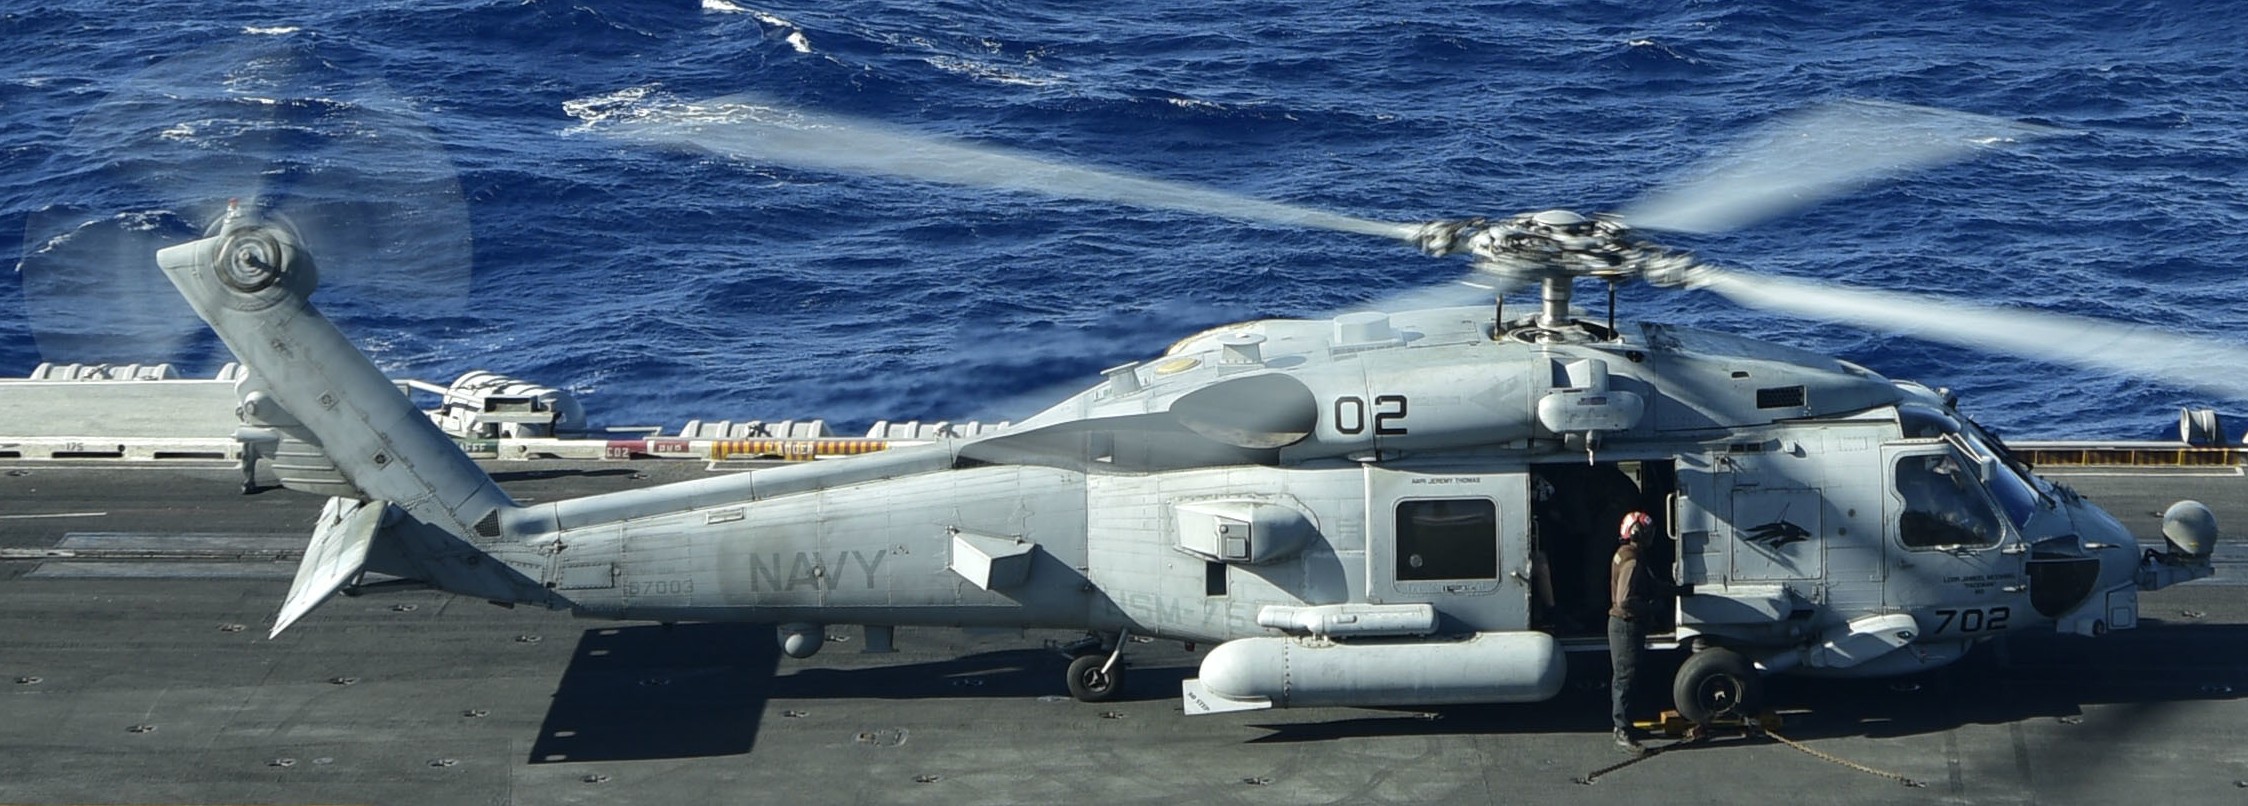 hsm-75 wolf pack helicopter maritime strike squadron mh-60r seahawk cvw-11 cvn-68 uss nimitz 19